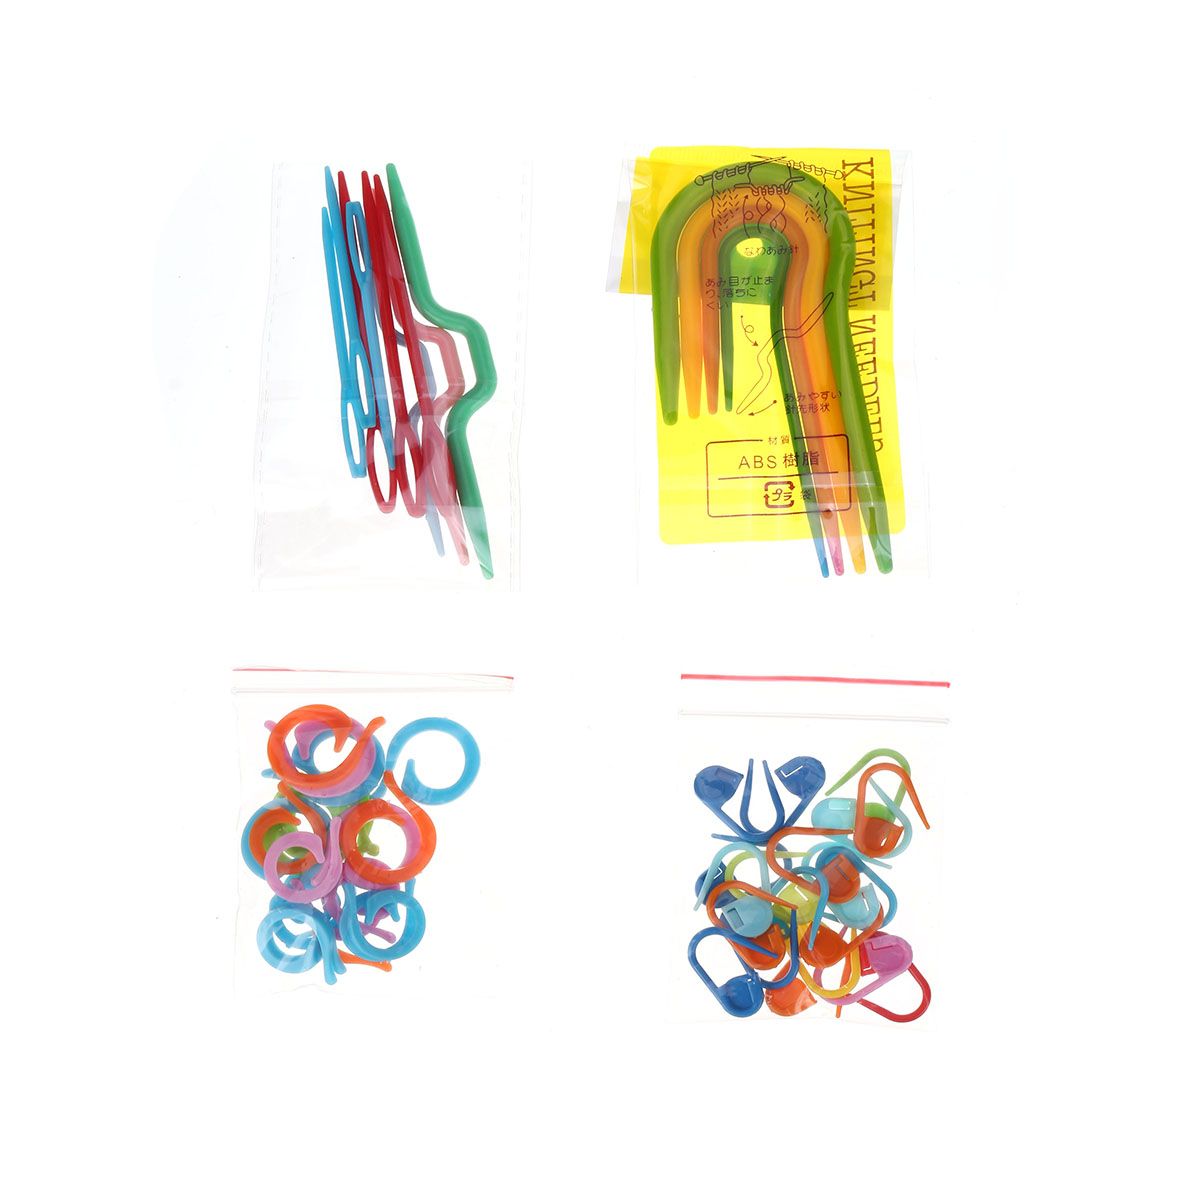 Winding-String-Machine-Ruler-Crochet-Needle-Wool-Bobbin-Buckle-Counting-Ring-DIY-Knitting-Tools-Kit-1498002